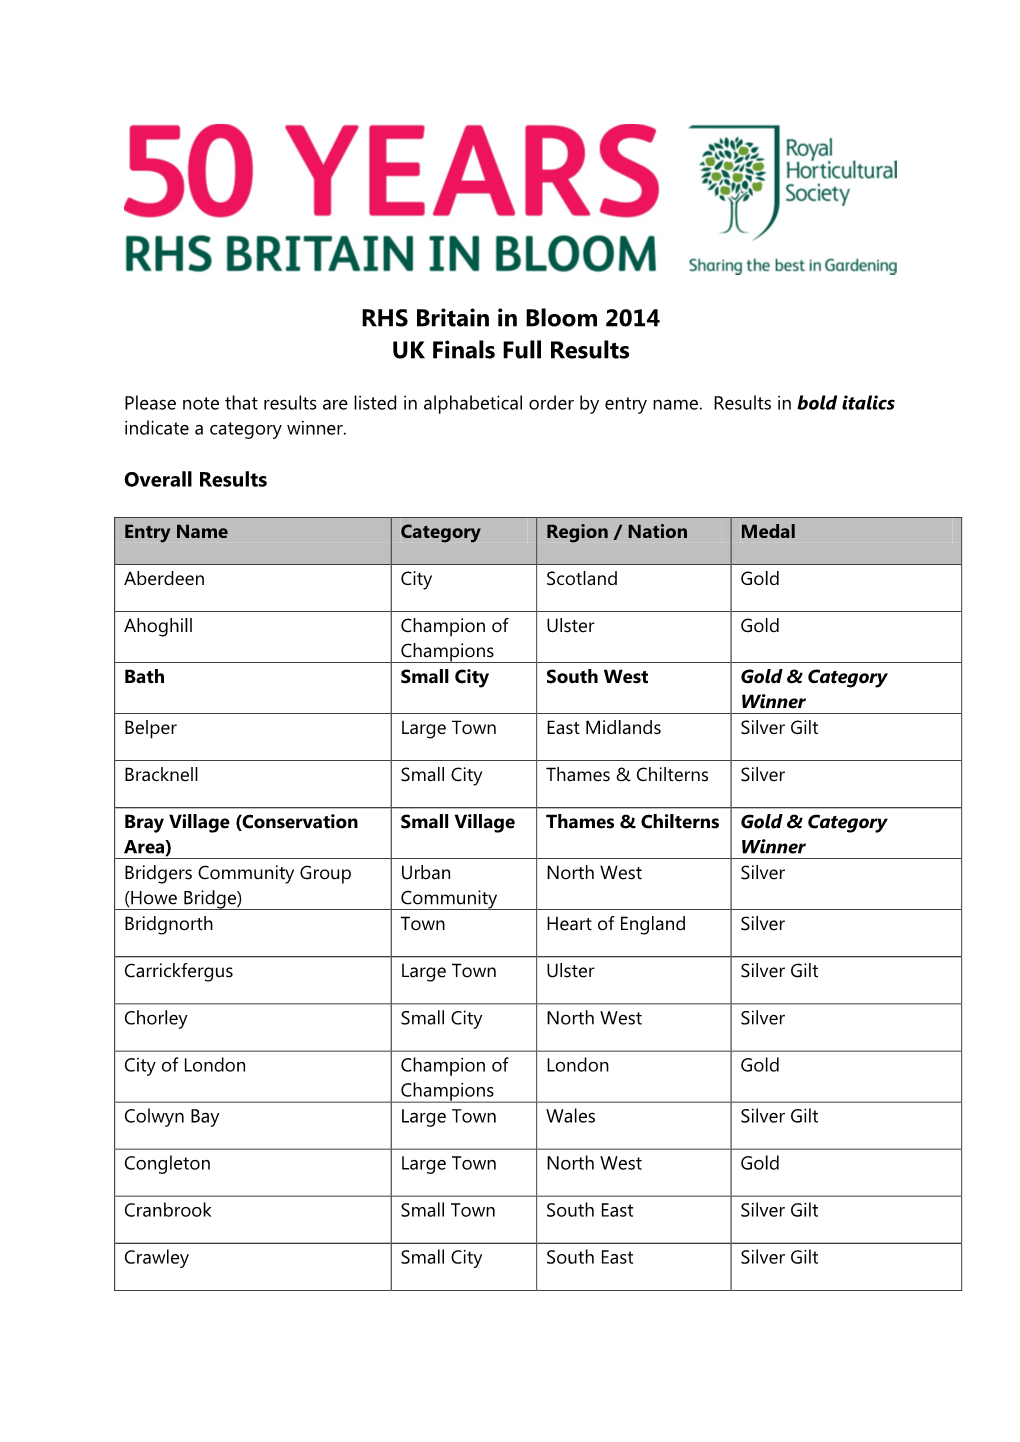 RHS Britain in Bloom 2014 UK Finals Full Results